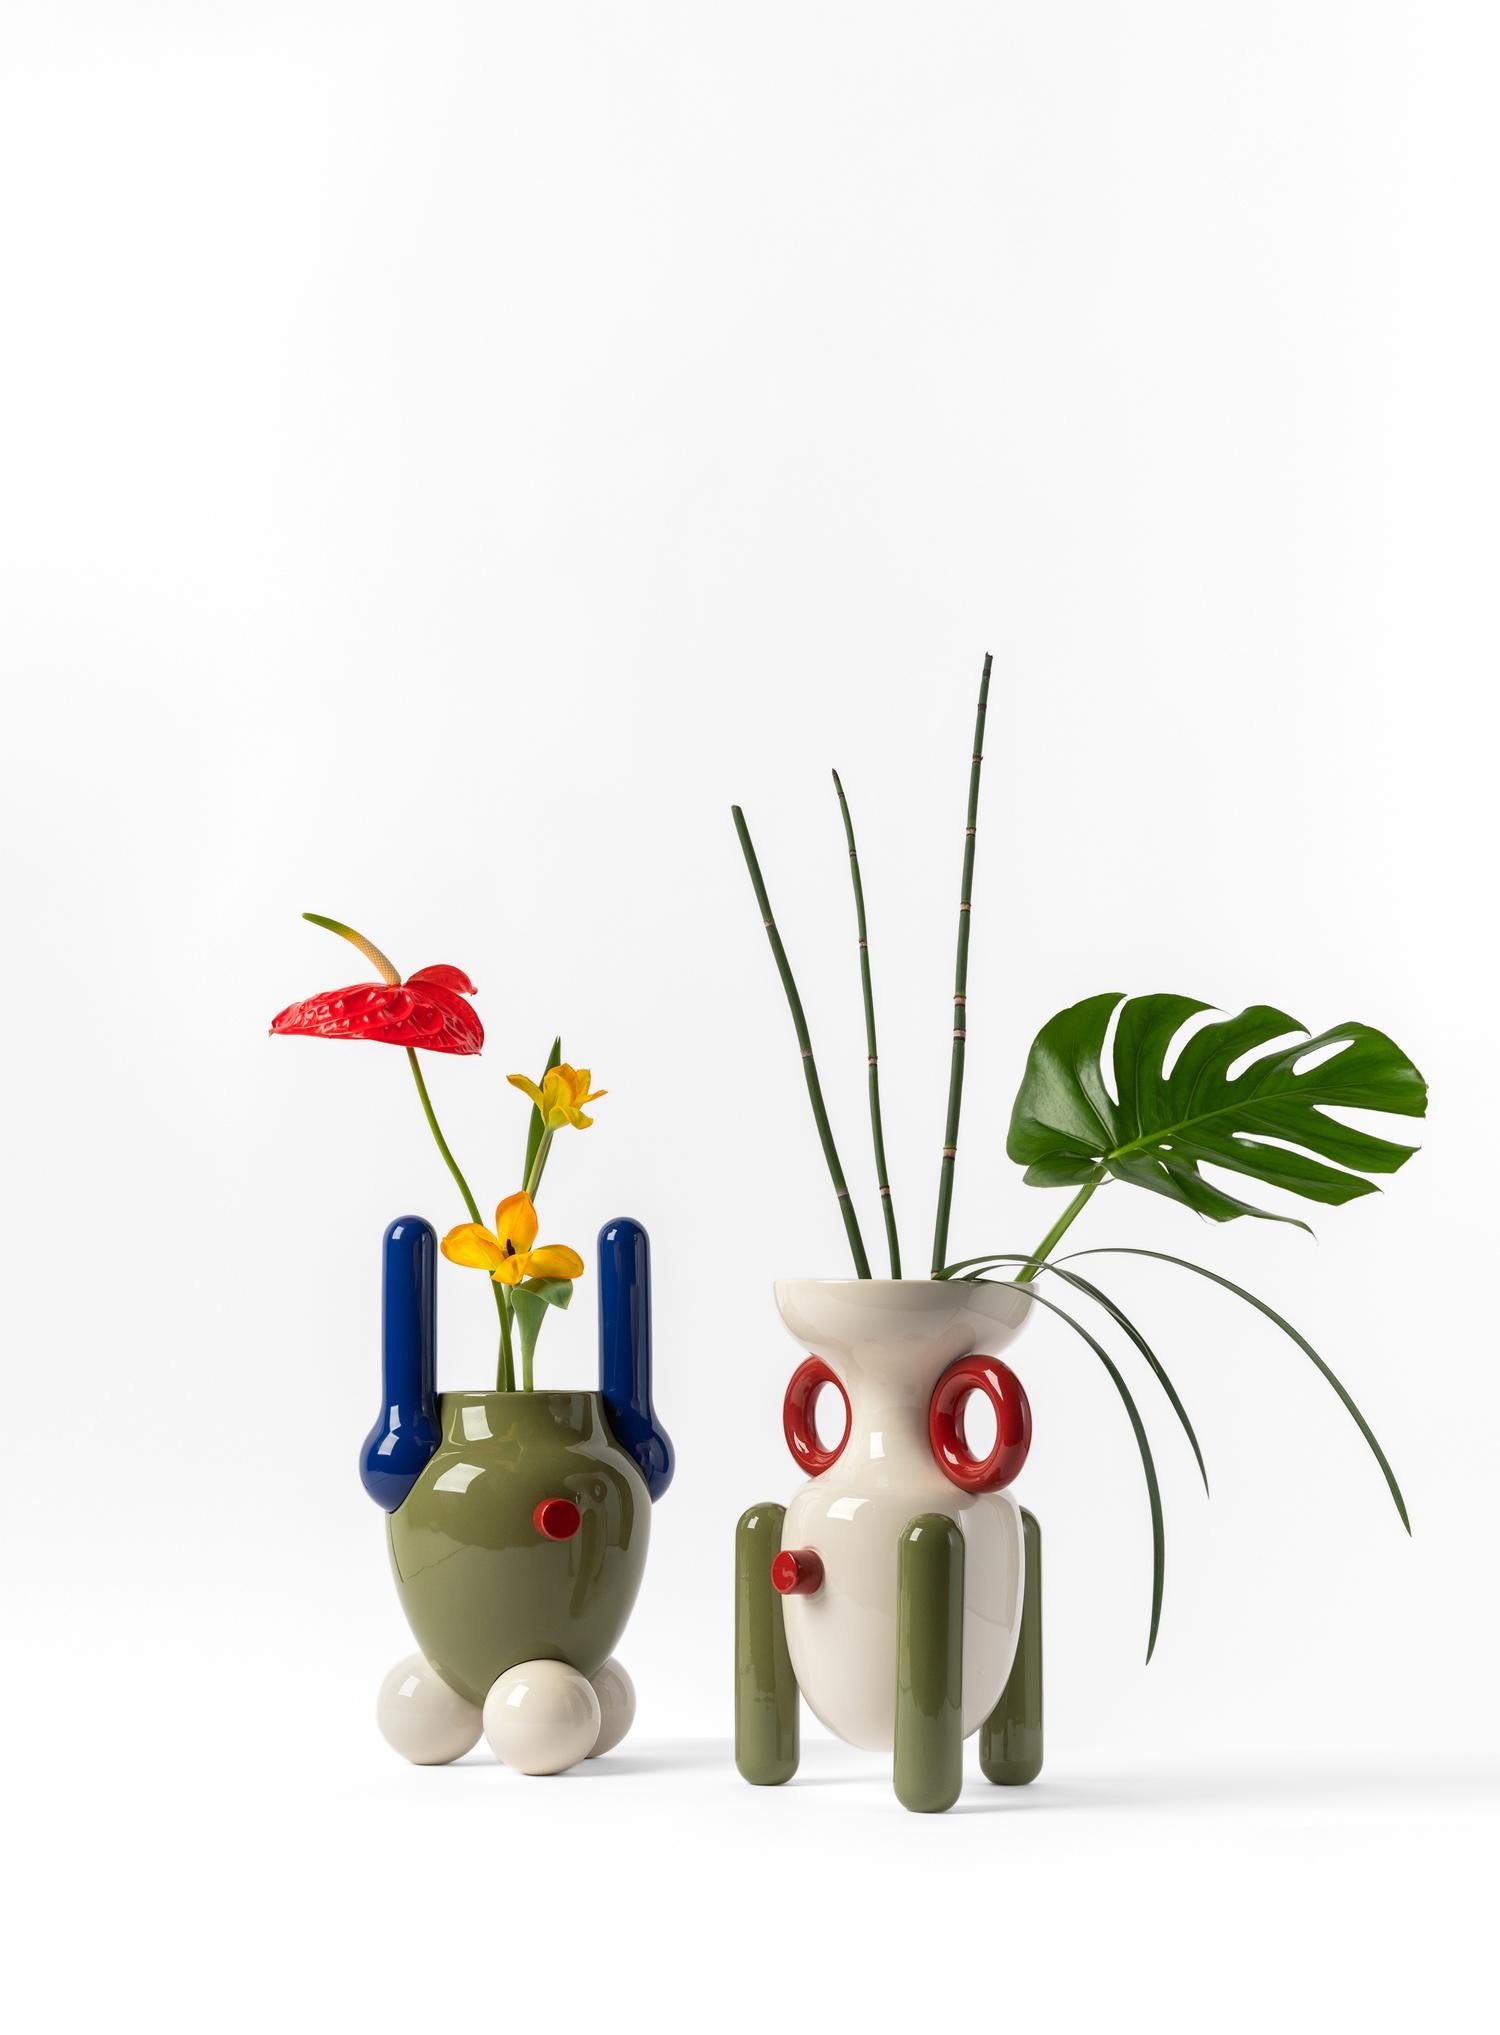 Contemporary Glazed Ceramic Explorer Vase No.2 by Jaime Haydon white, red, green For Sale 7